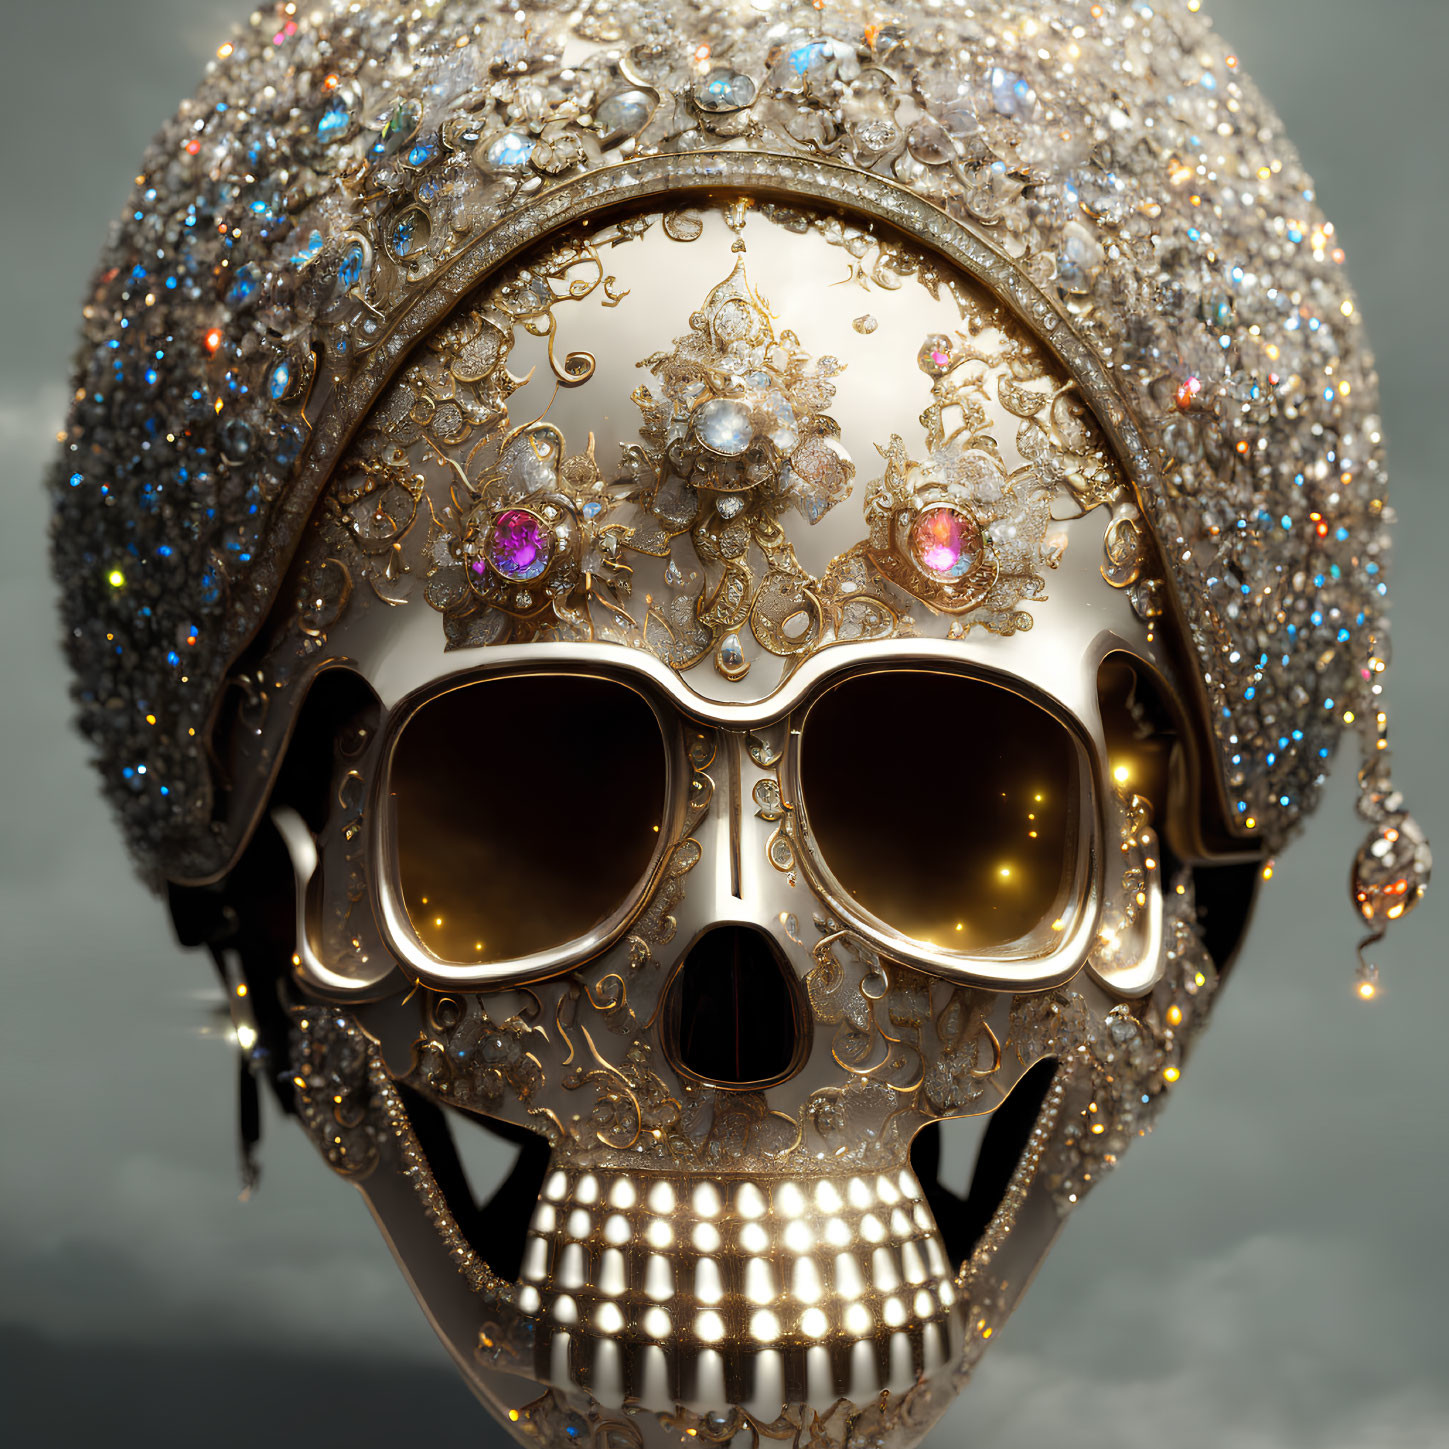 The Duchess's Skull